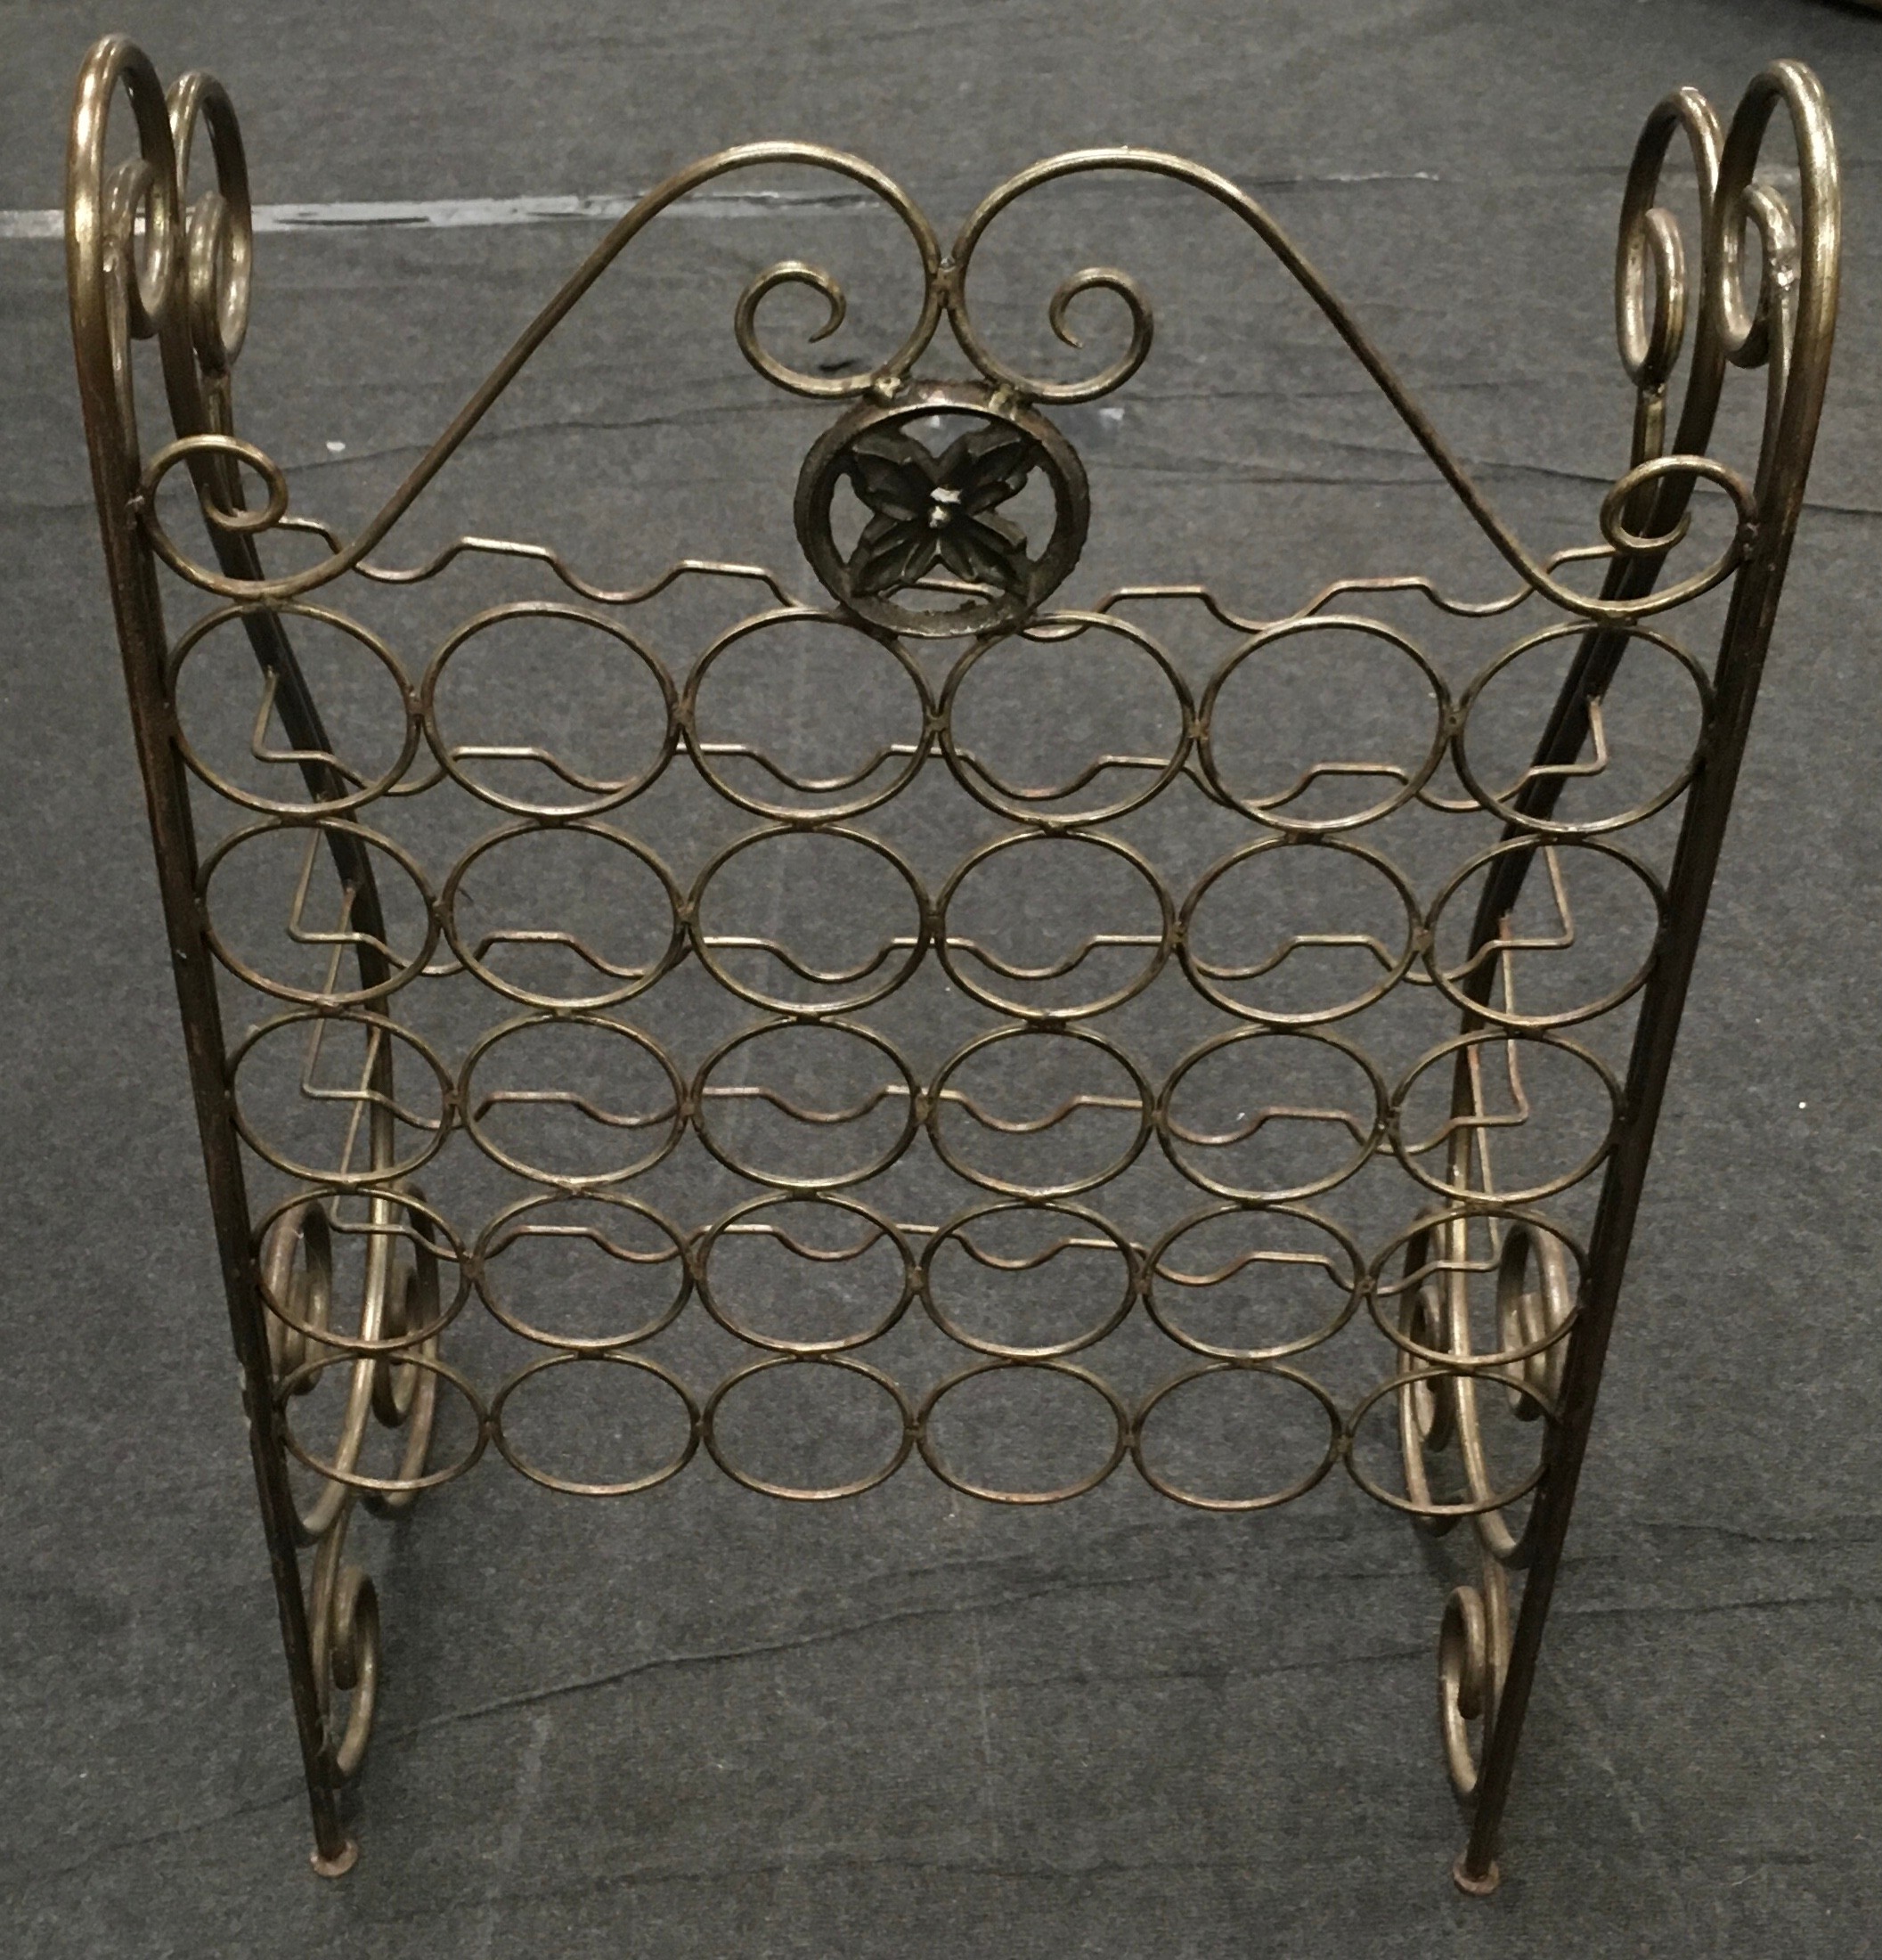 large ornate cast metal wine rack for holding up to 30 bottles - Image 3 of 3